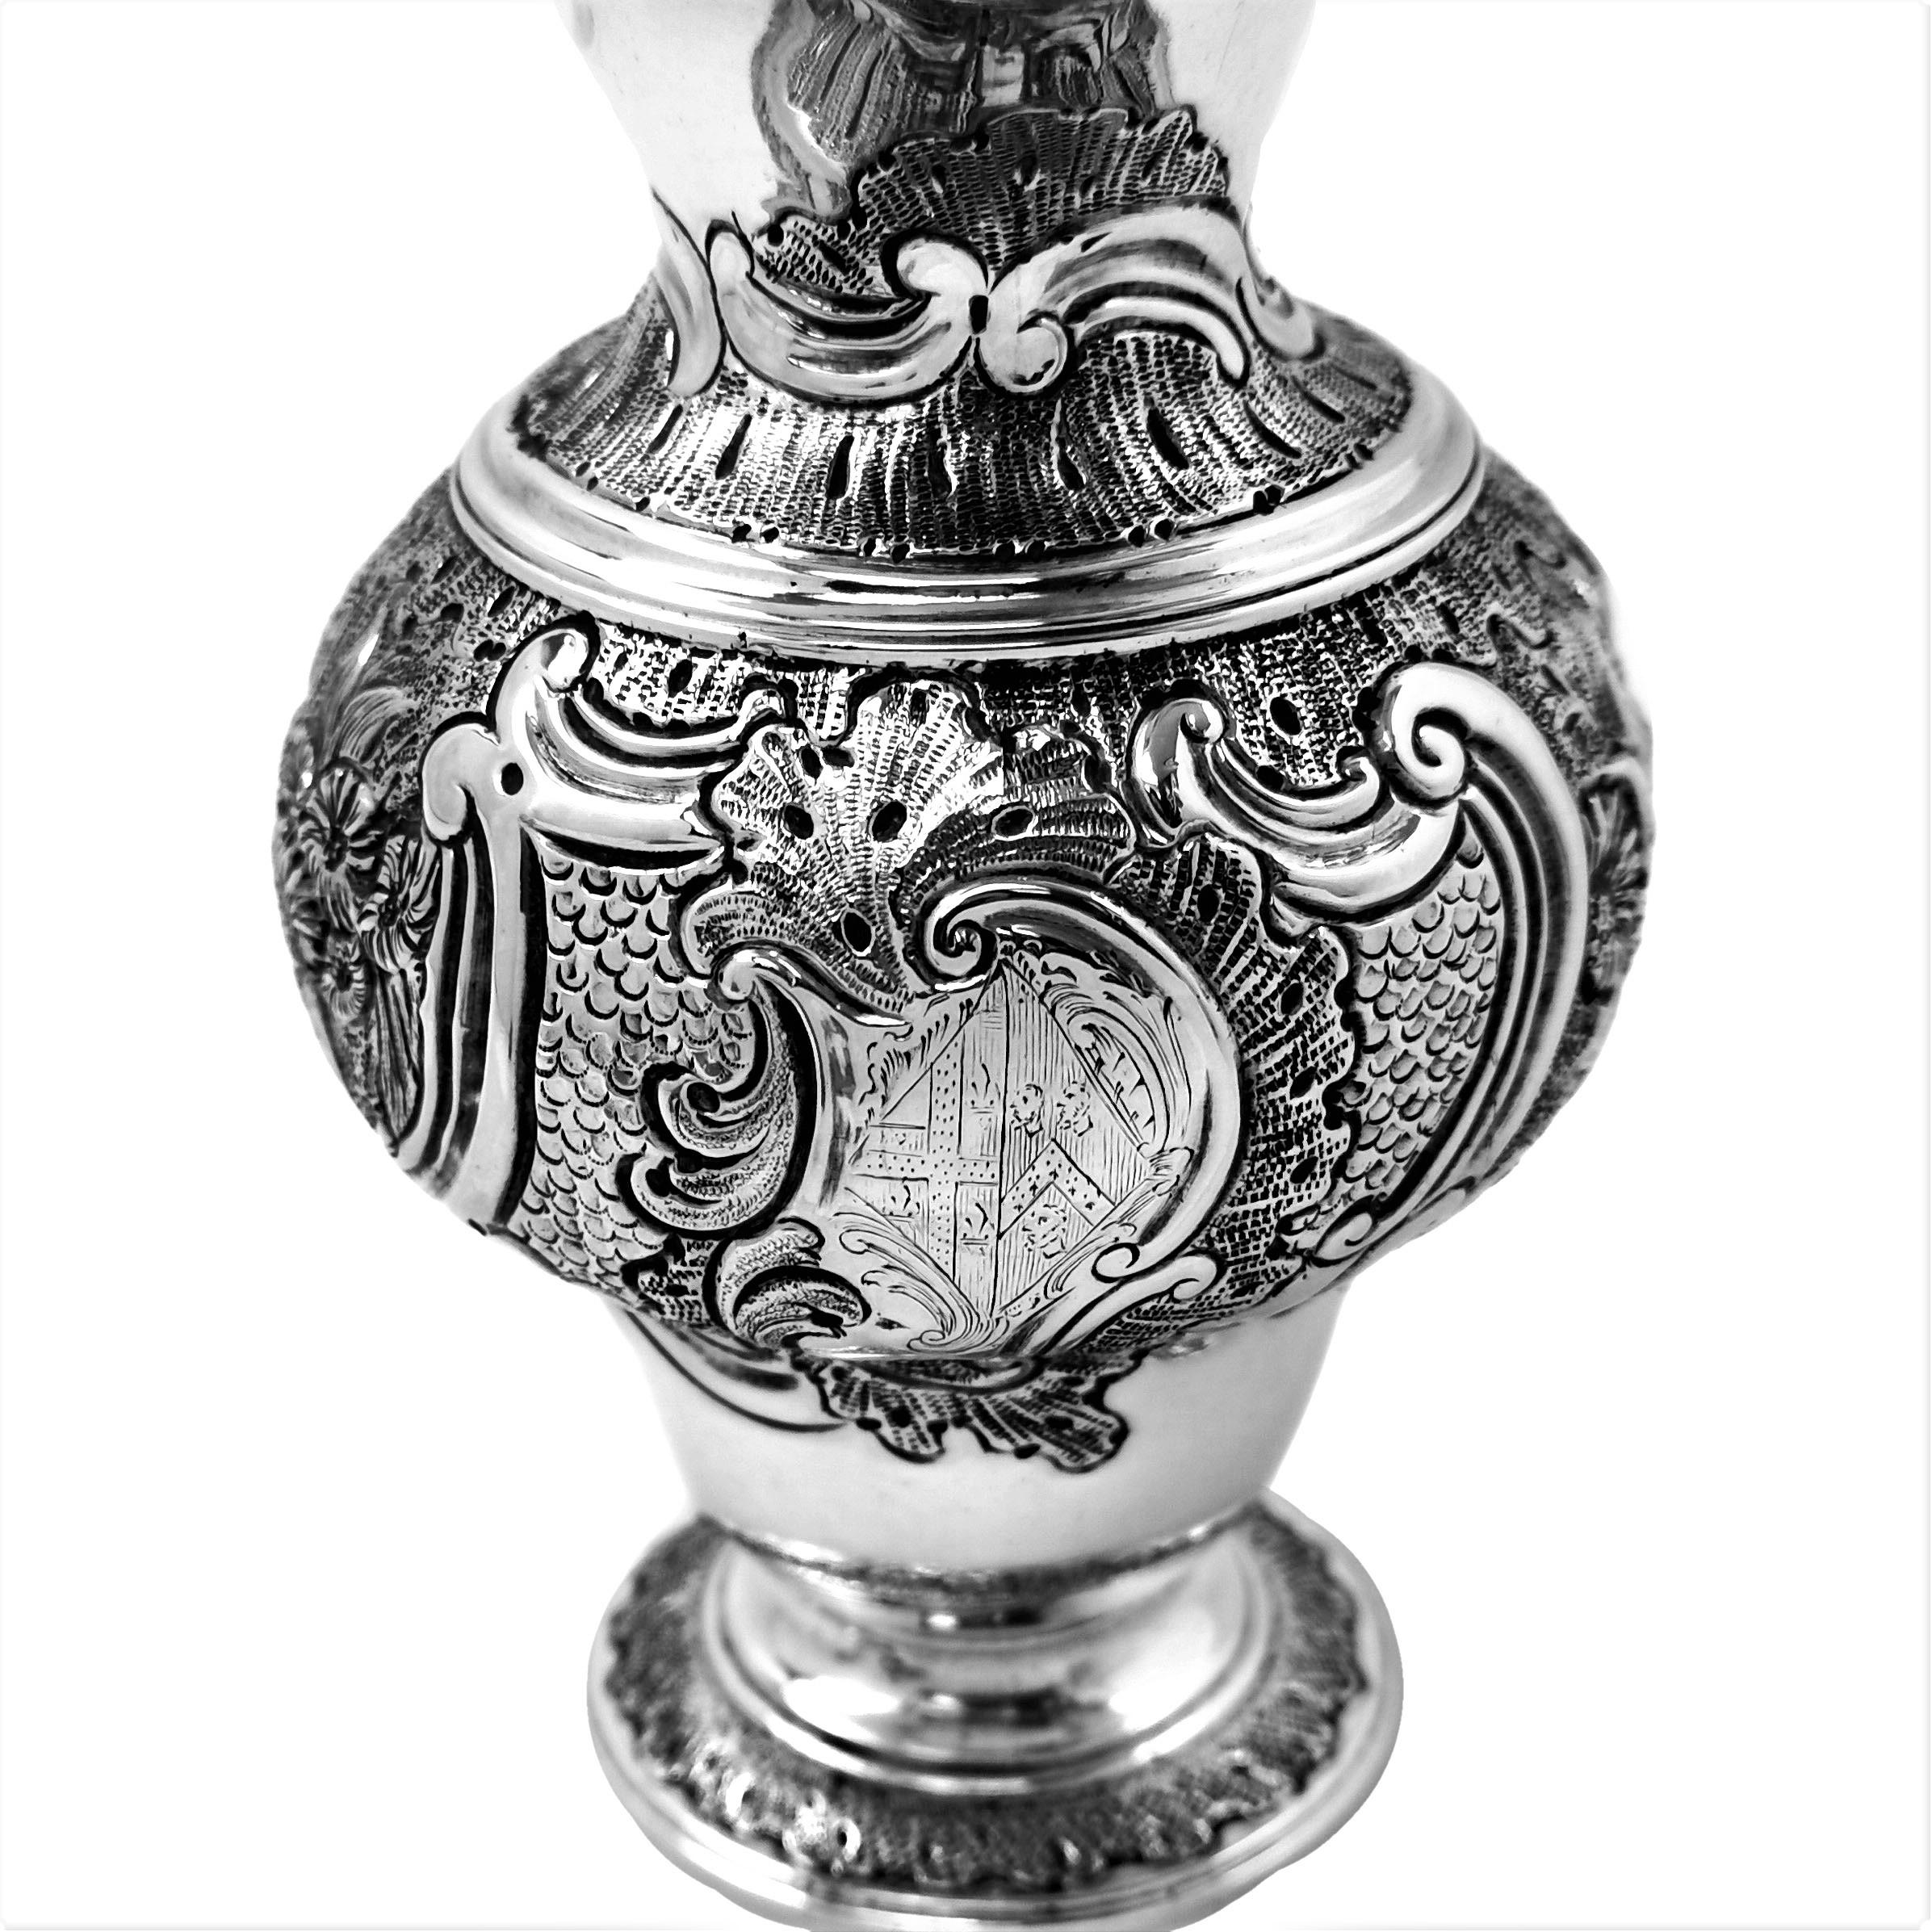 English Antique George II Sterling Silver Cream Jug / Milk Jug c 1750 18th Century